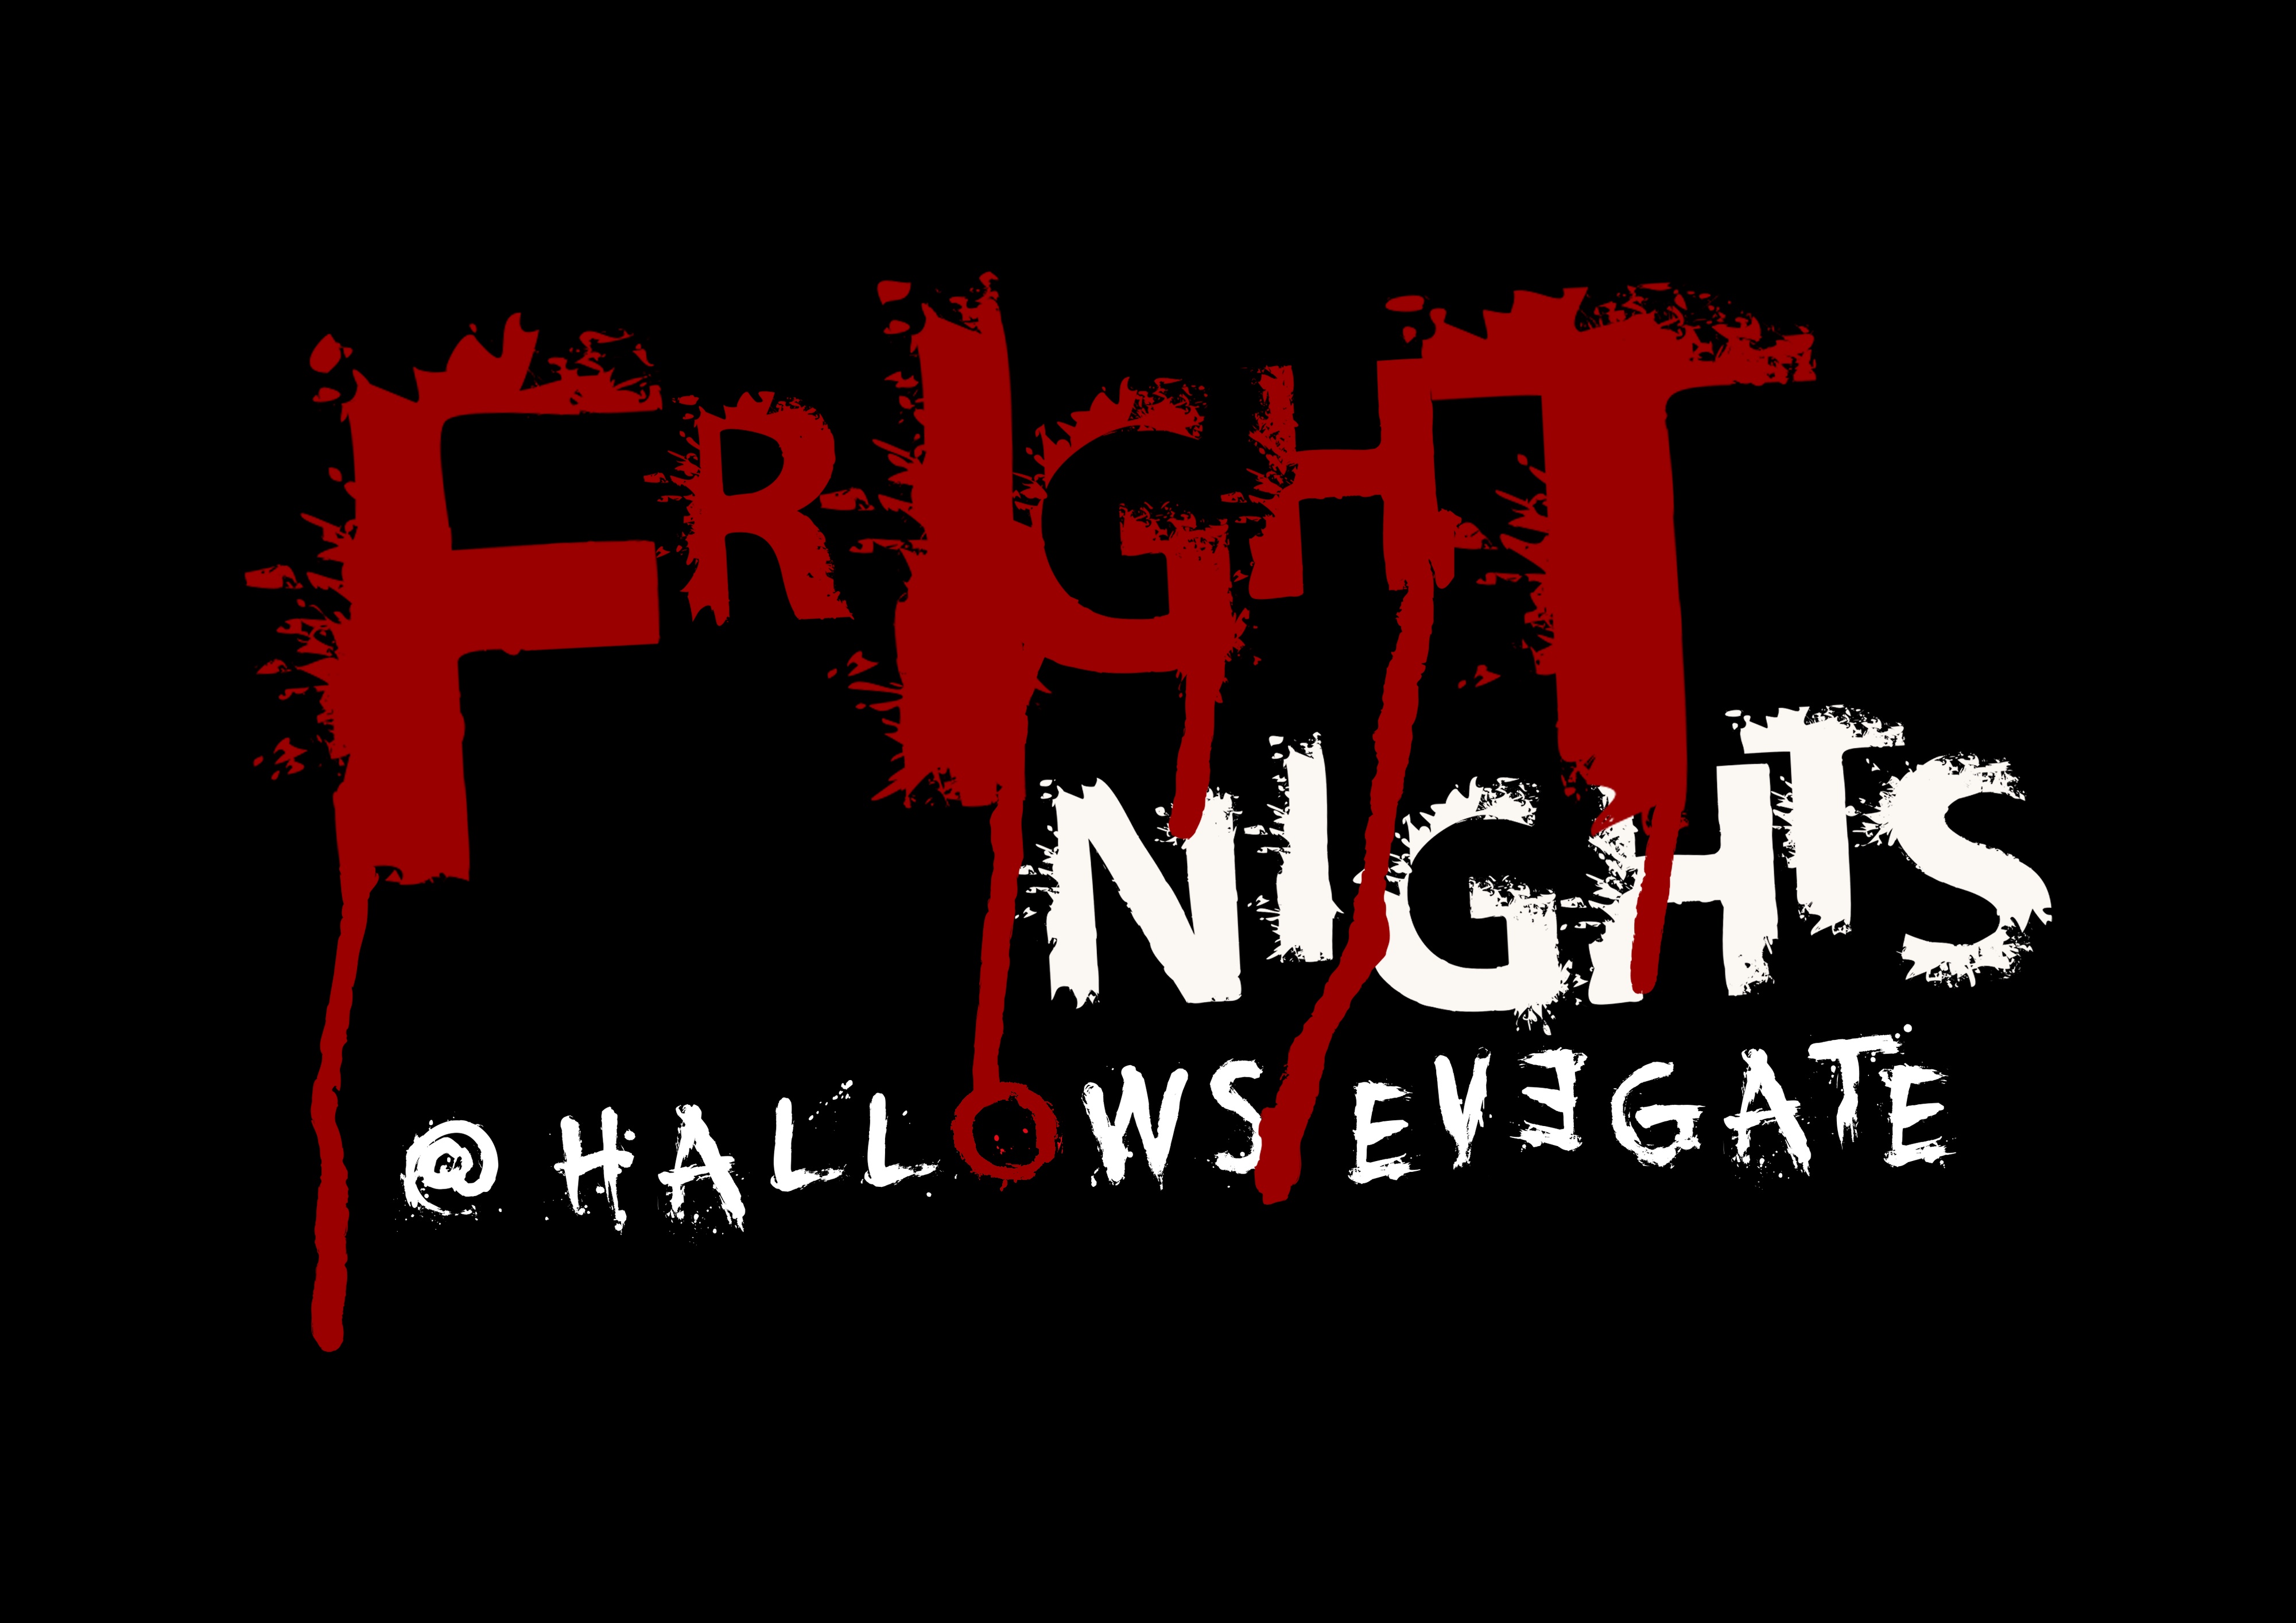 Fright Nights Hallows Evegate